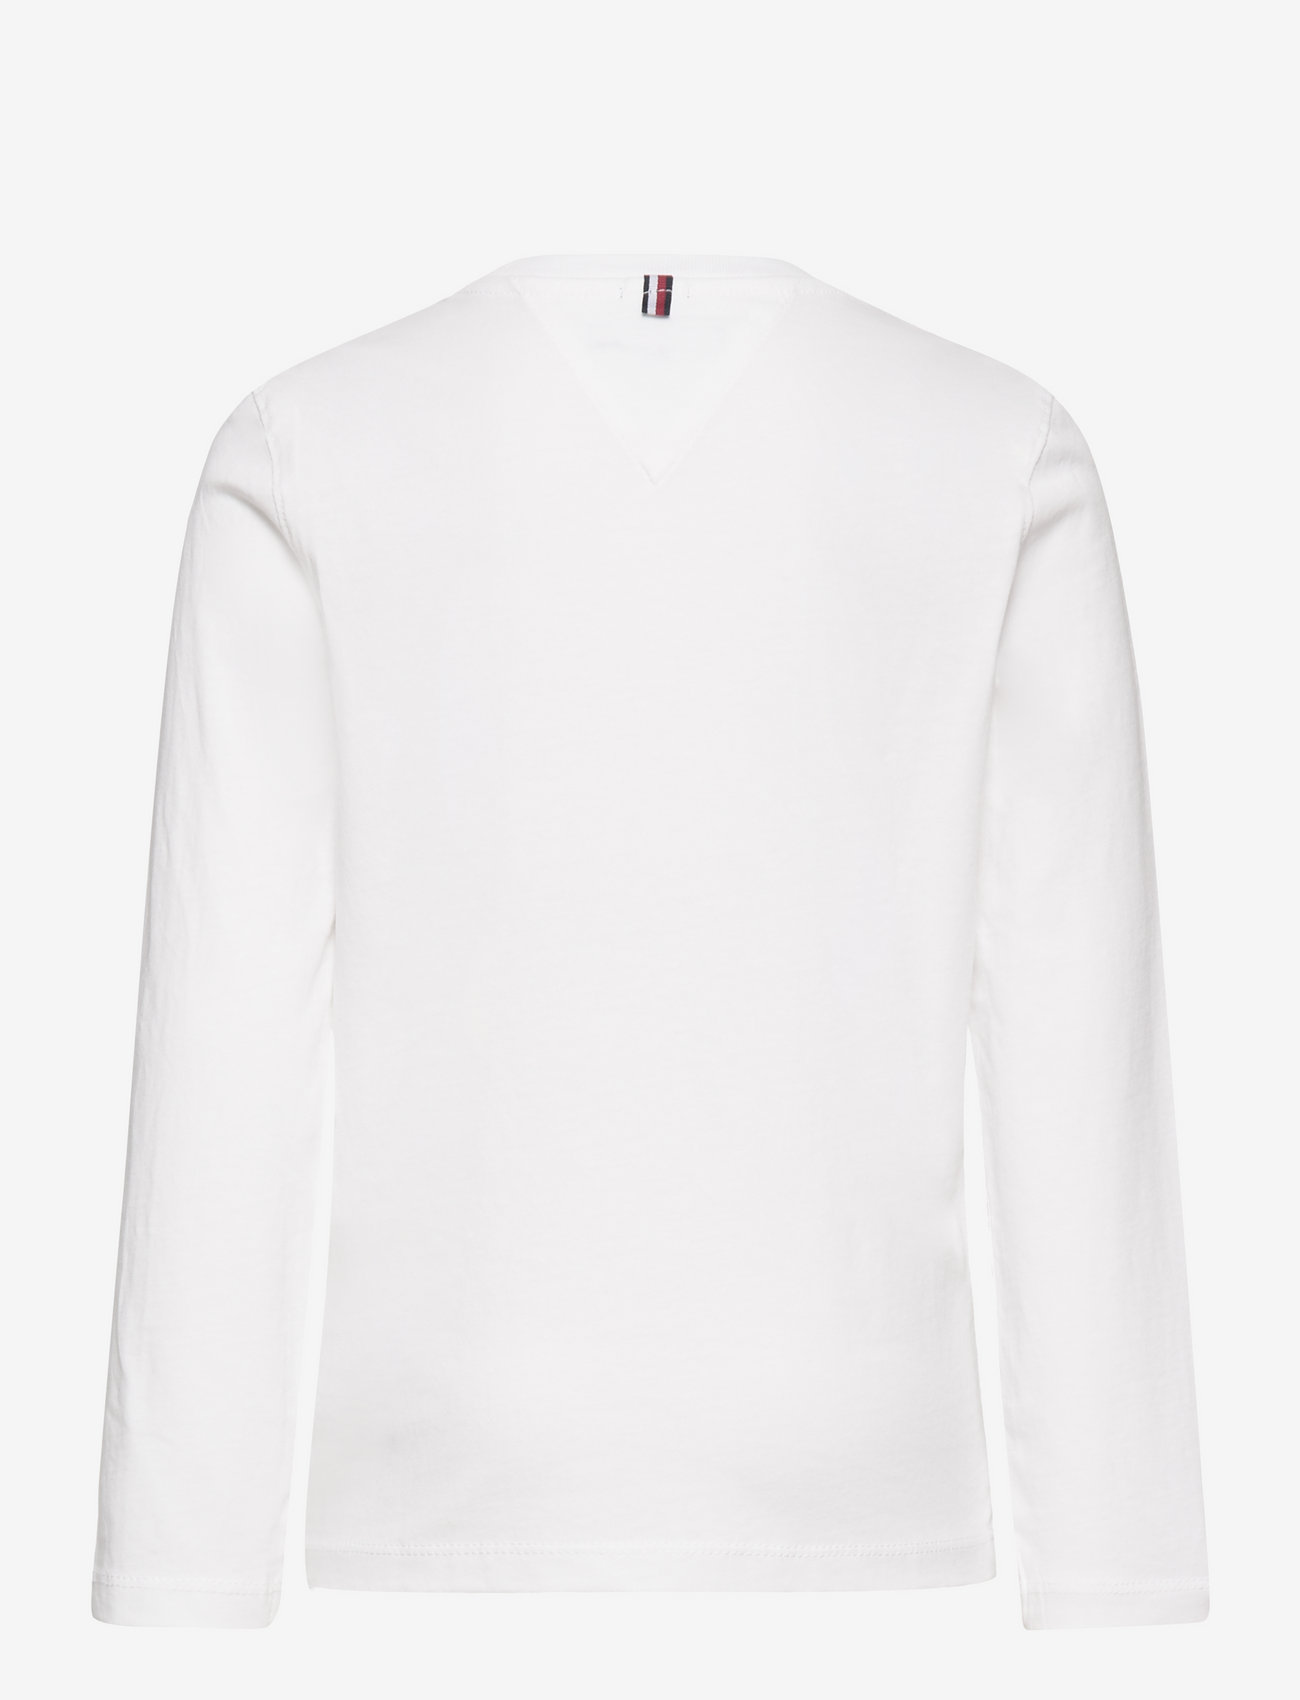 Tommy Hilfiger - BOYS BASIC CN KNIT L/S - plain long-sleeved t-shirt - bright white - 1